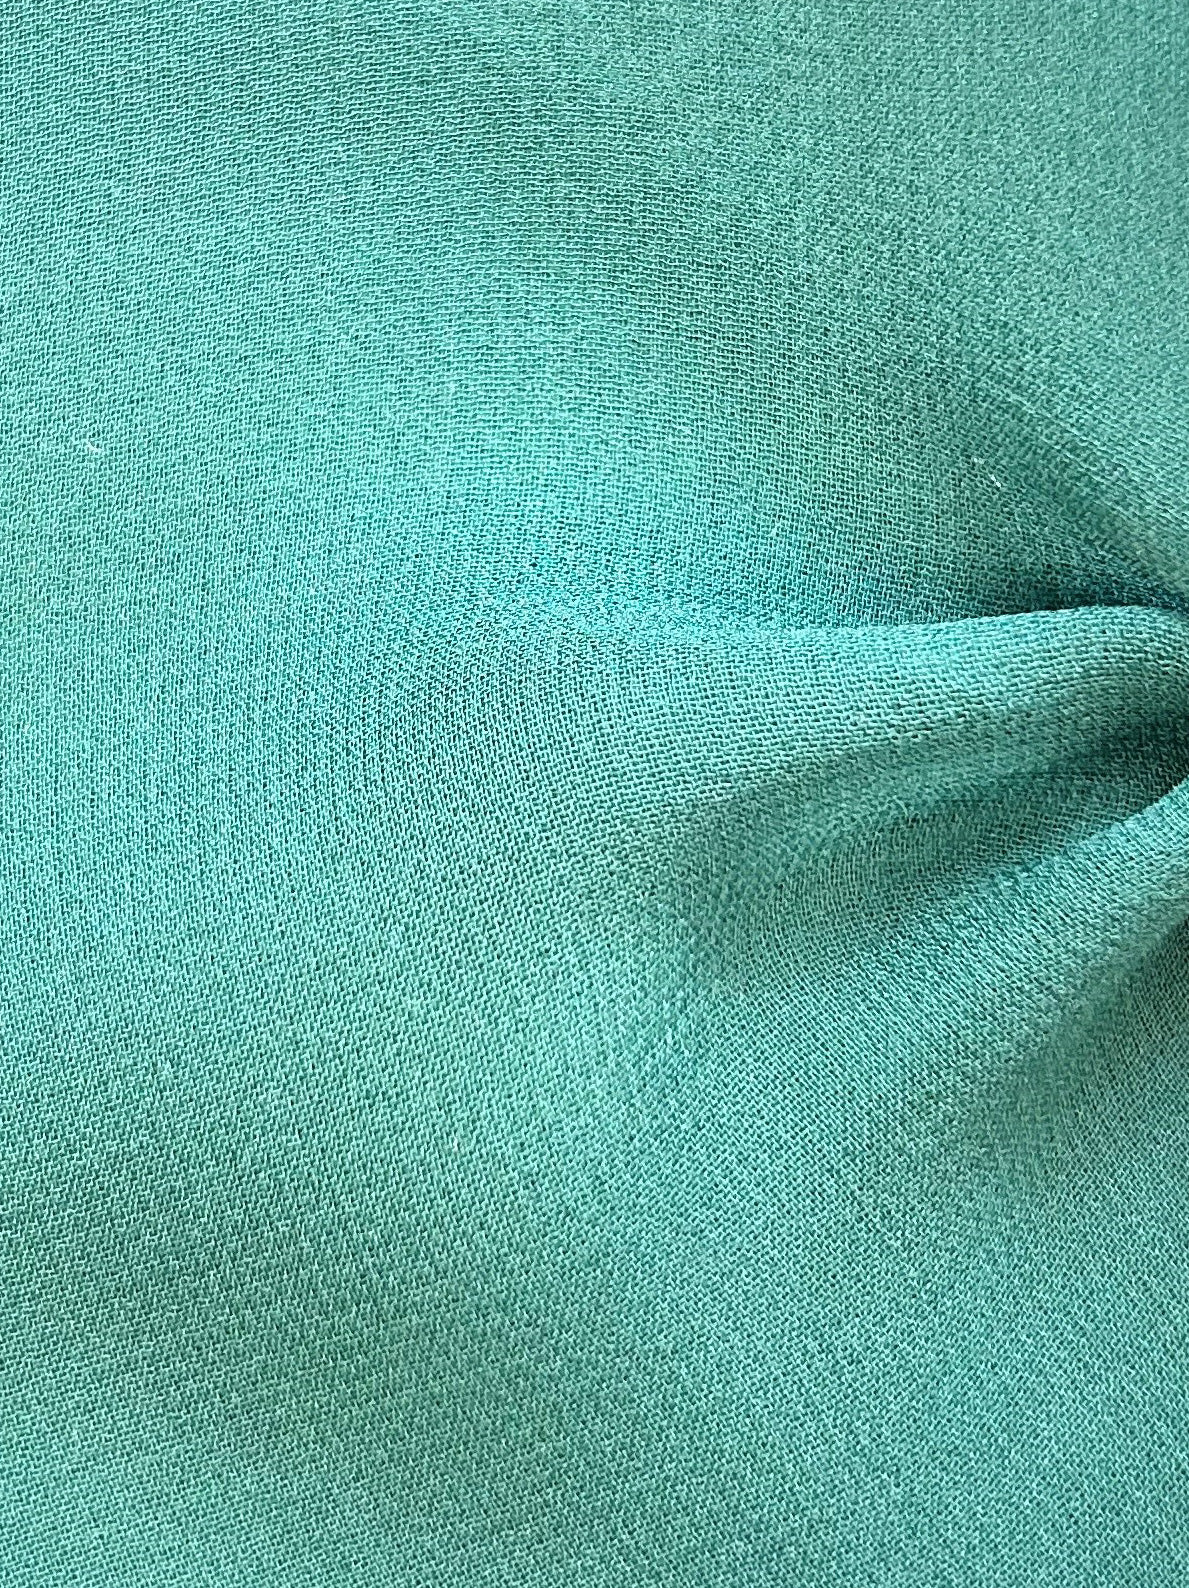 Teal Green Silk Georgette - Shimmer